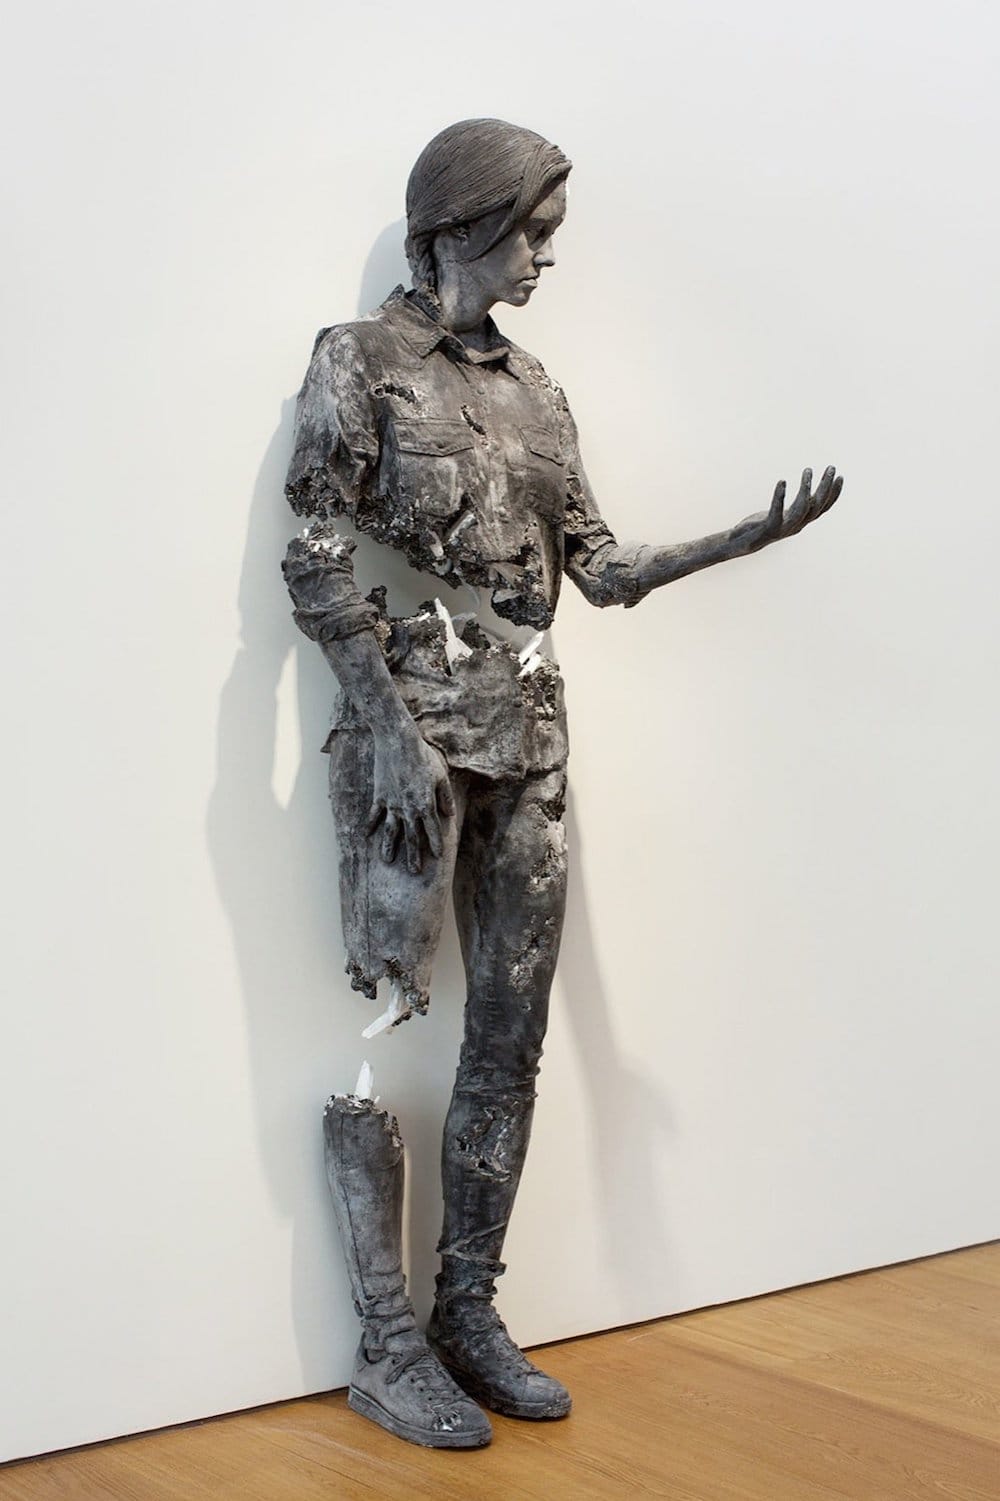 Life Size Human Figure Hydrostone Sculptures By Daniel Arsham (5)